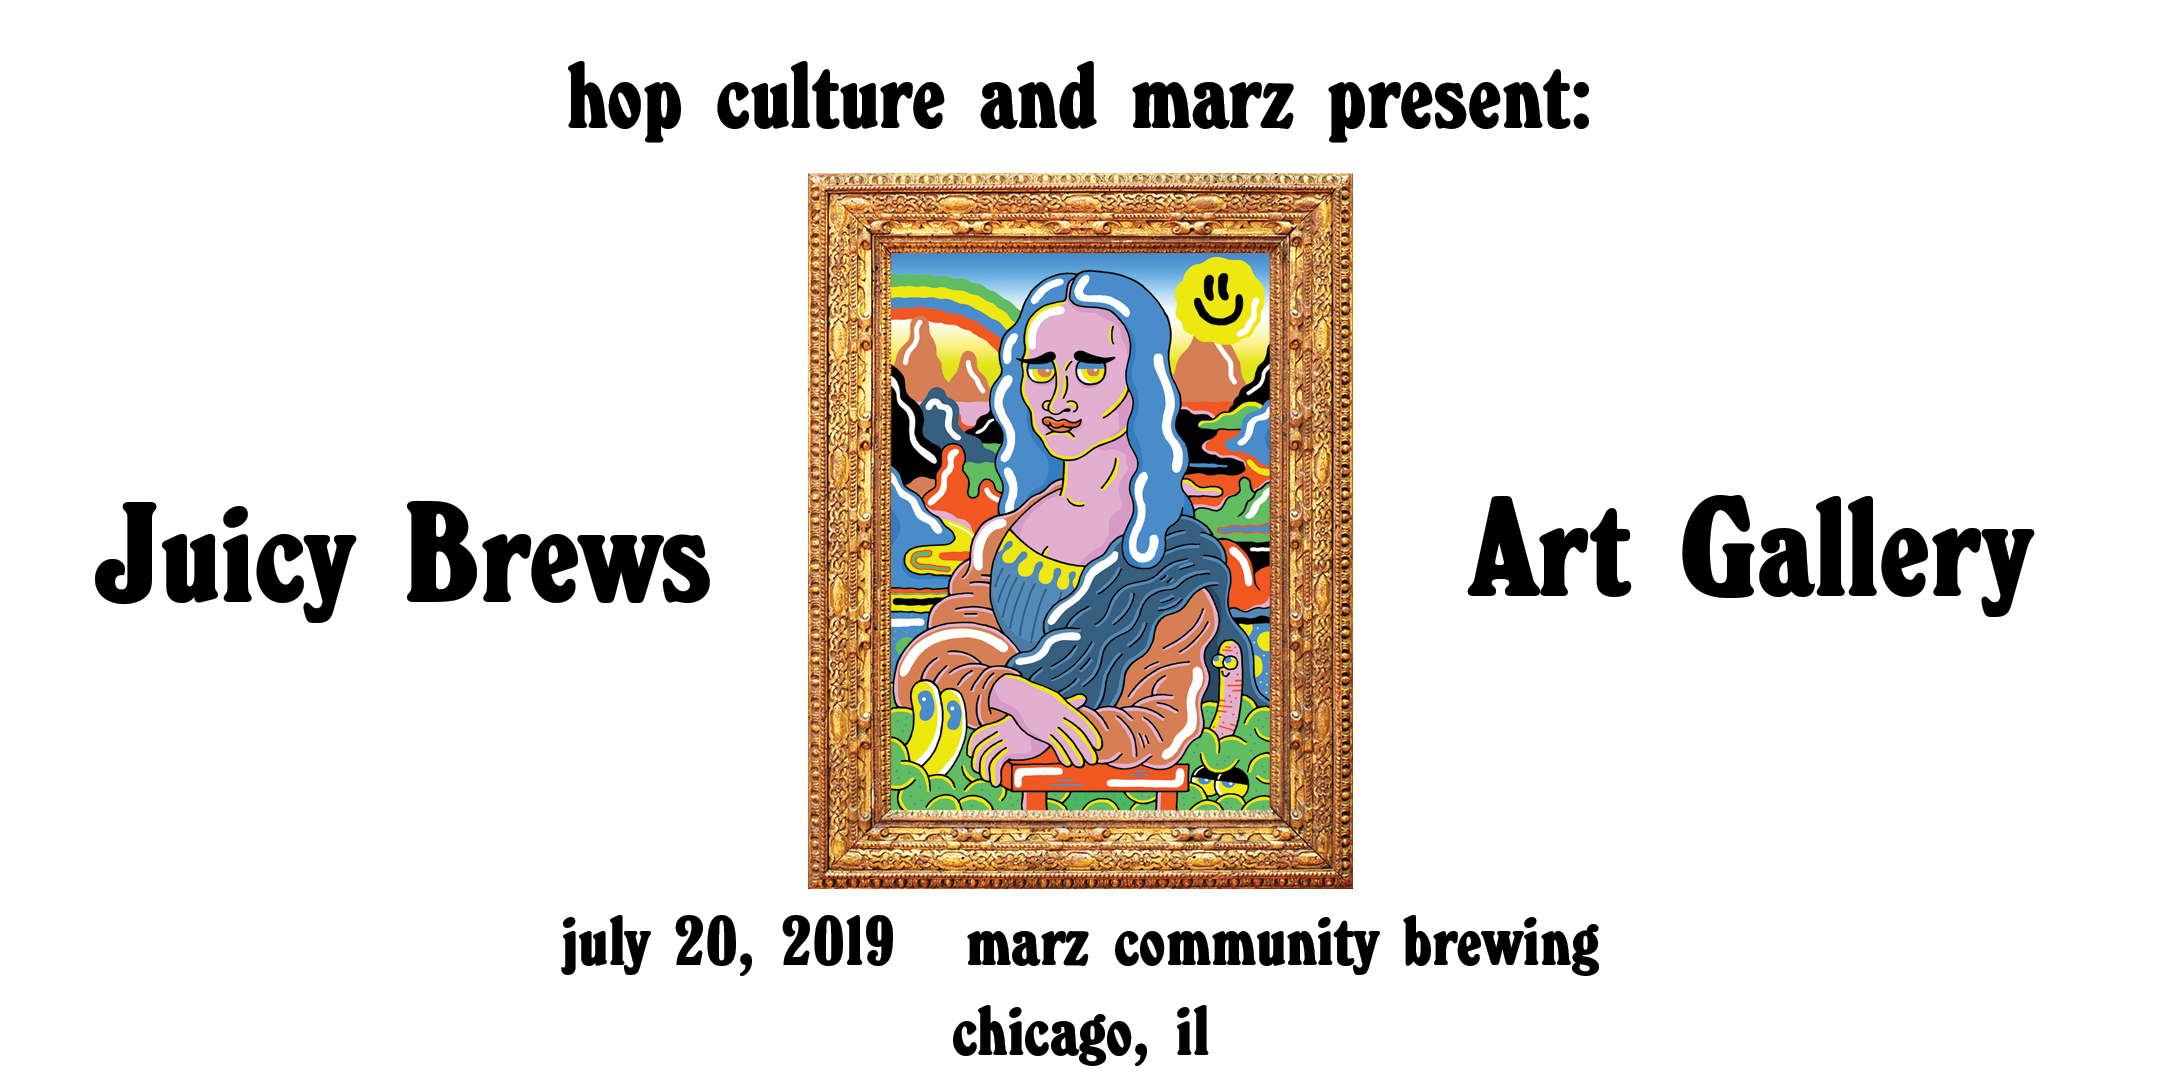 Hop Culture Teams Up with Marz Community Brewing for Juicy Brews Art Gallery